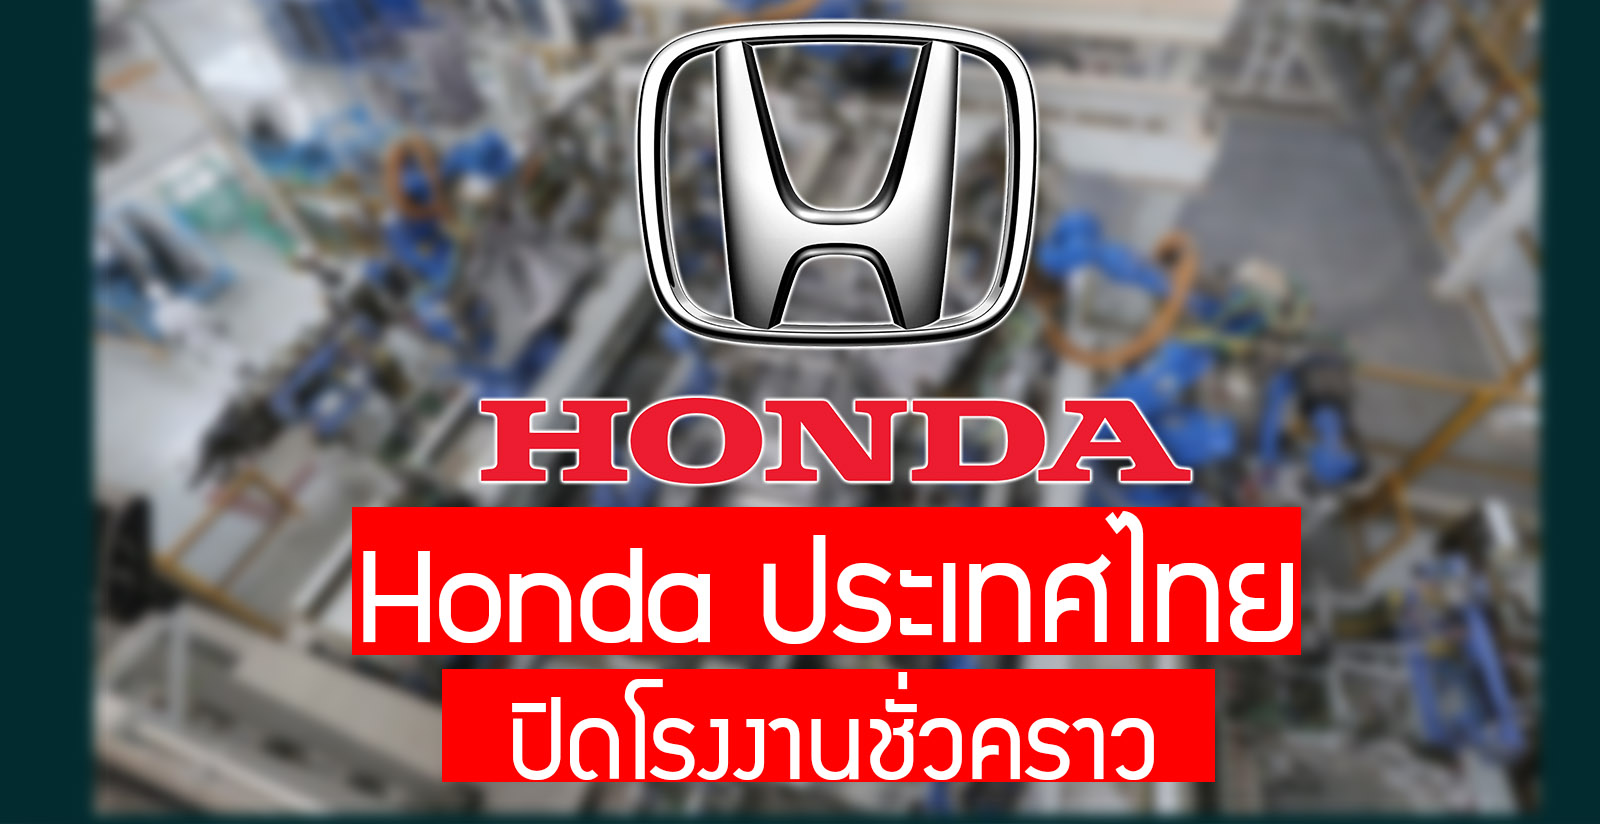 Honda ประเทศไทย หยุดผลิต 2 โรงงาน อยุธยา-ปราจีนบุรี 27 มีนาคม – 30 เมษายน 2563